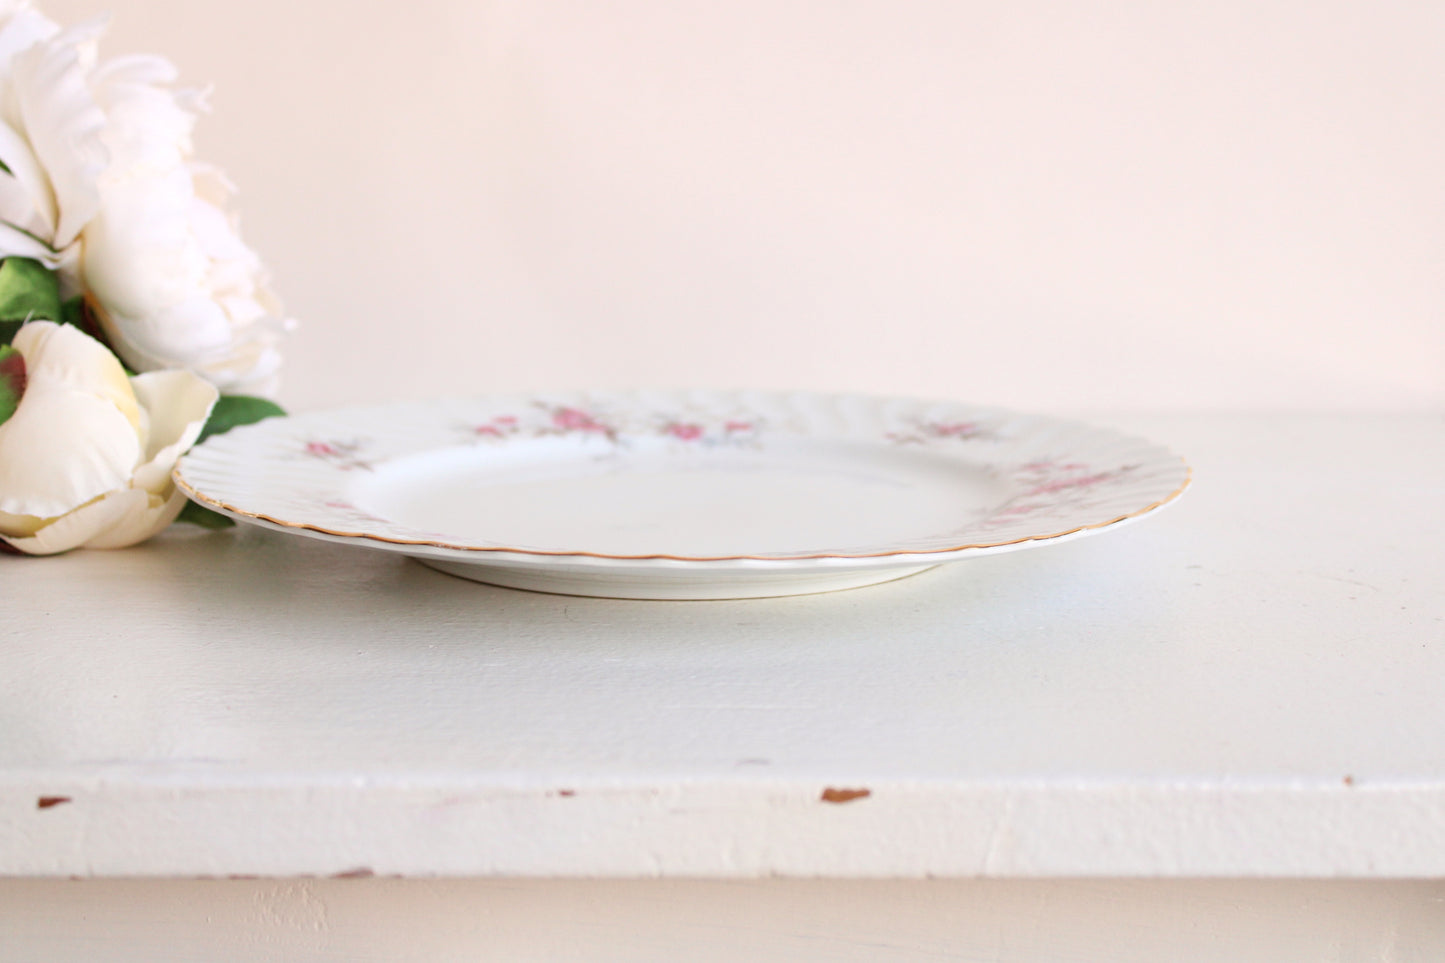 Vintage Nasco Dinner Plate in Briar Rose